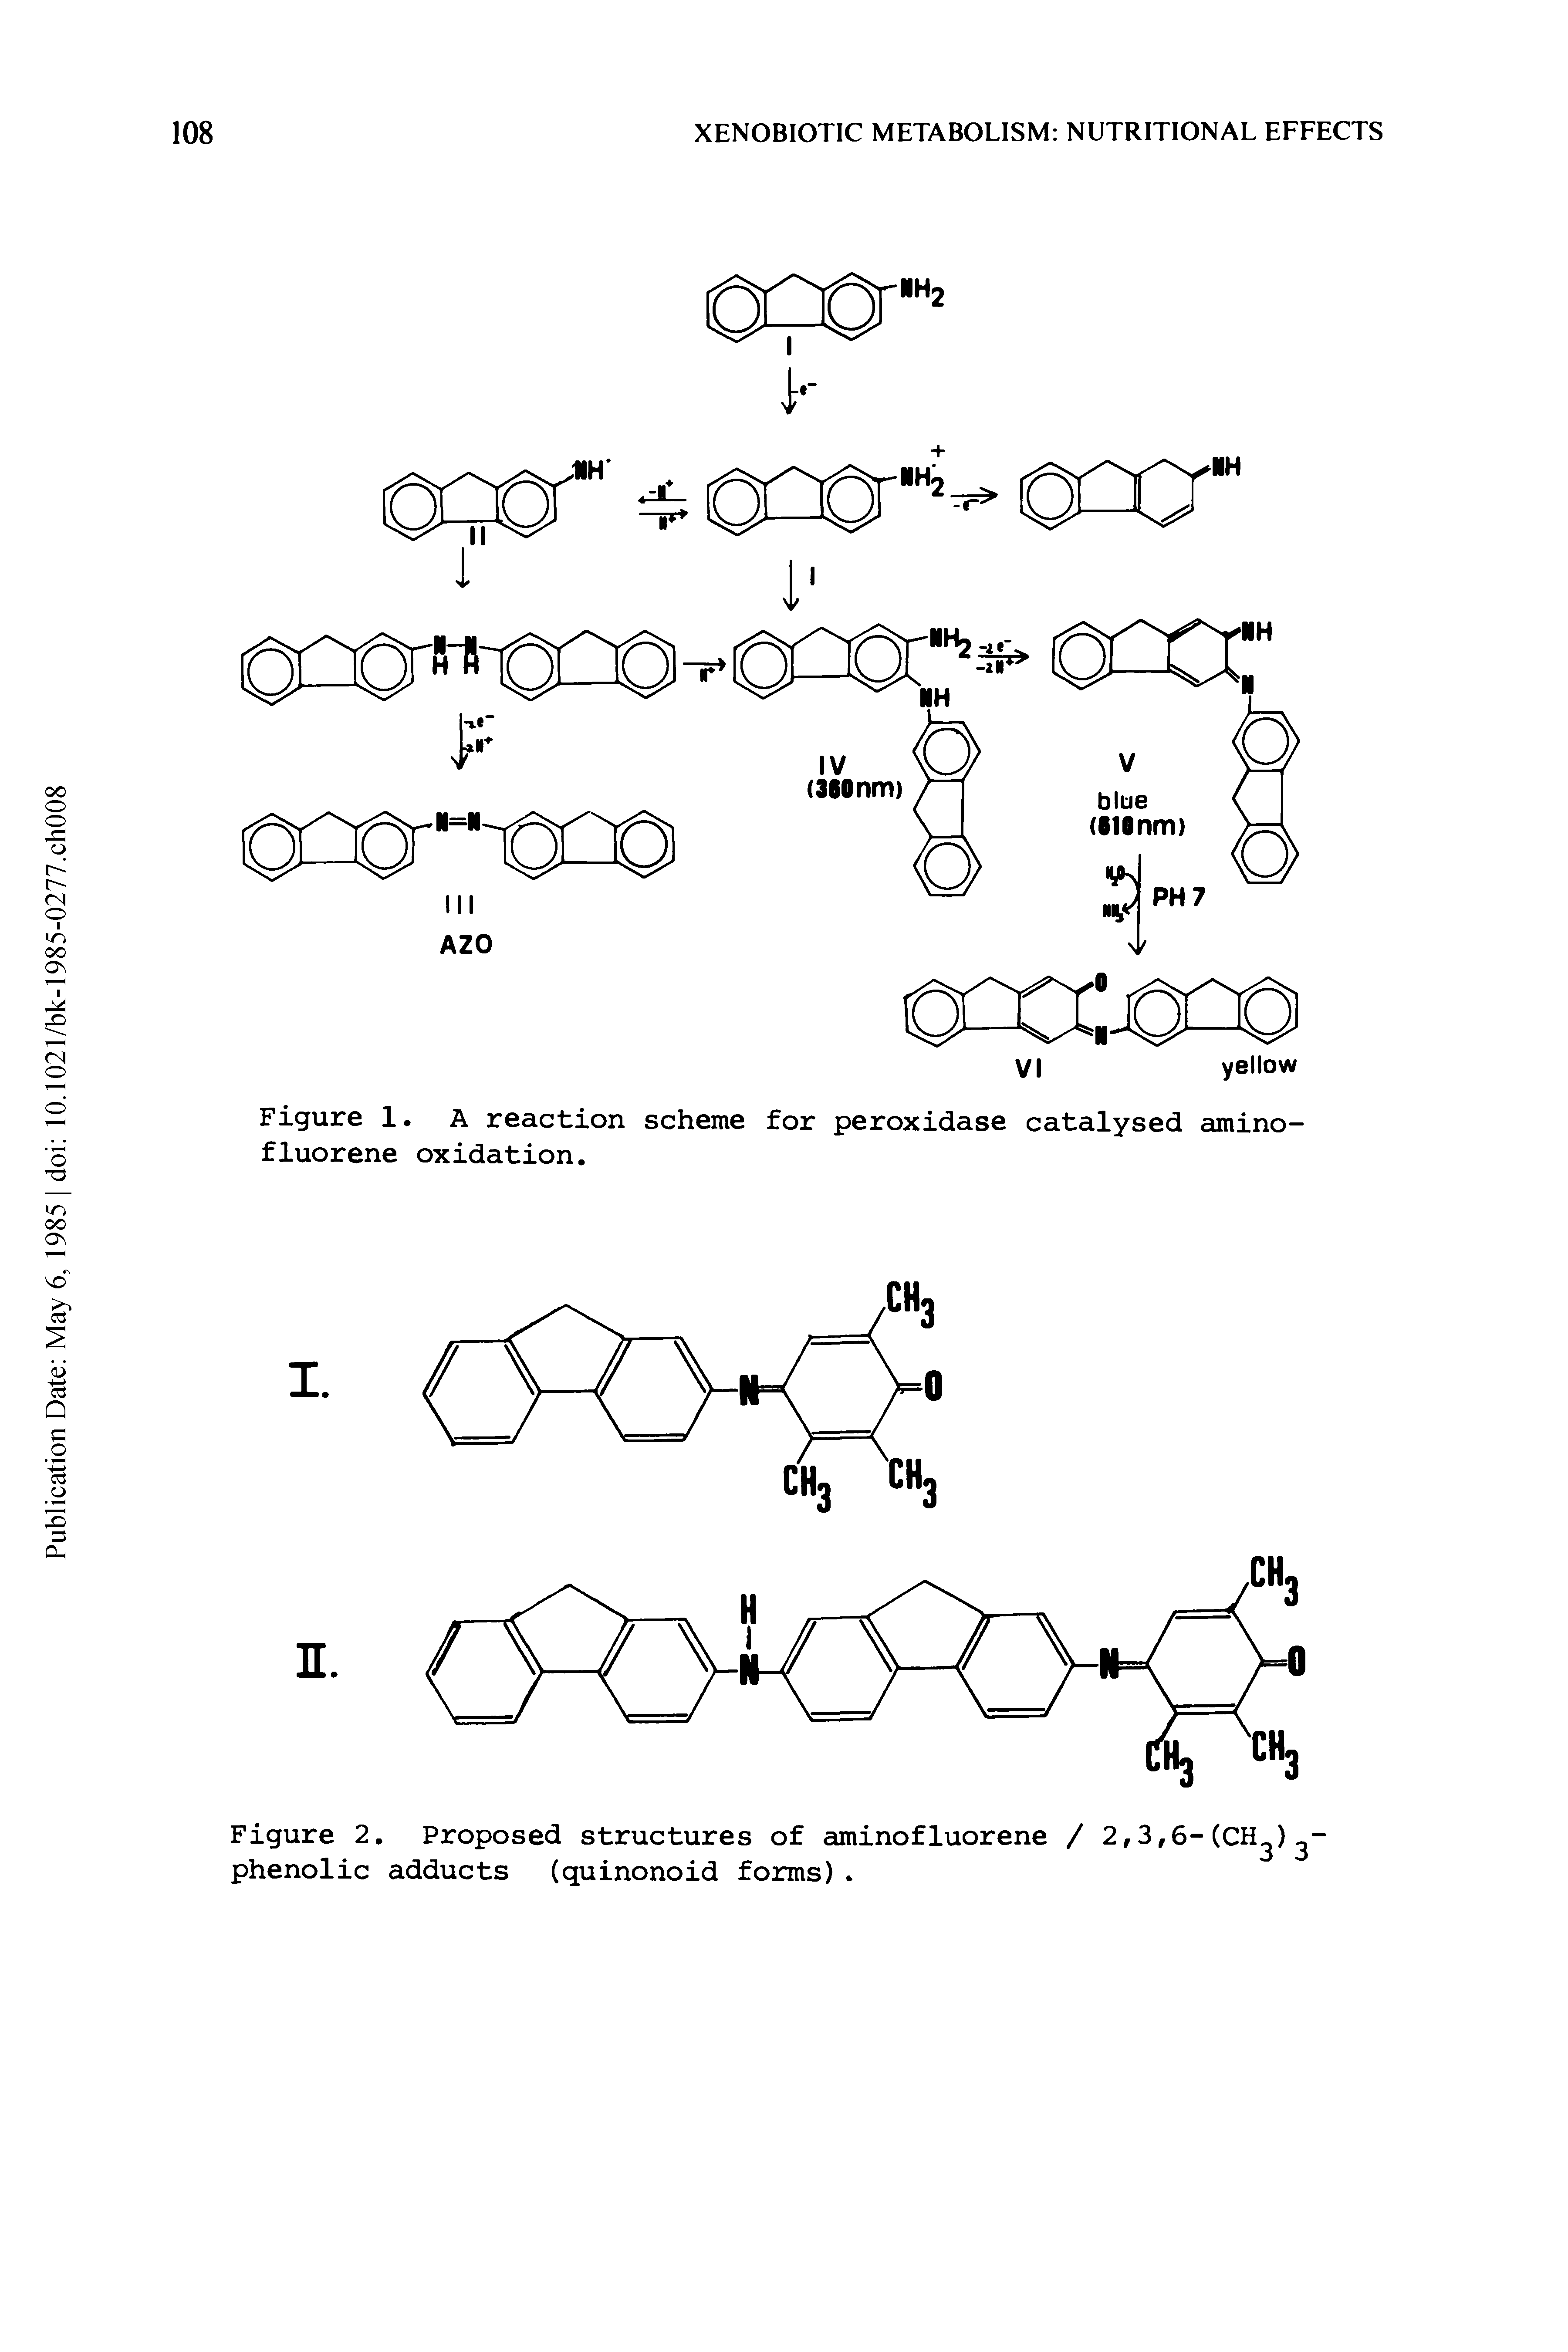 Figure 1. A reaction scheme for peroxidase catalysed amino-fluorene oxidation.